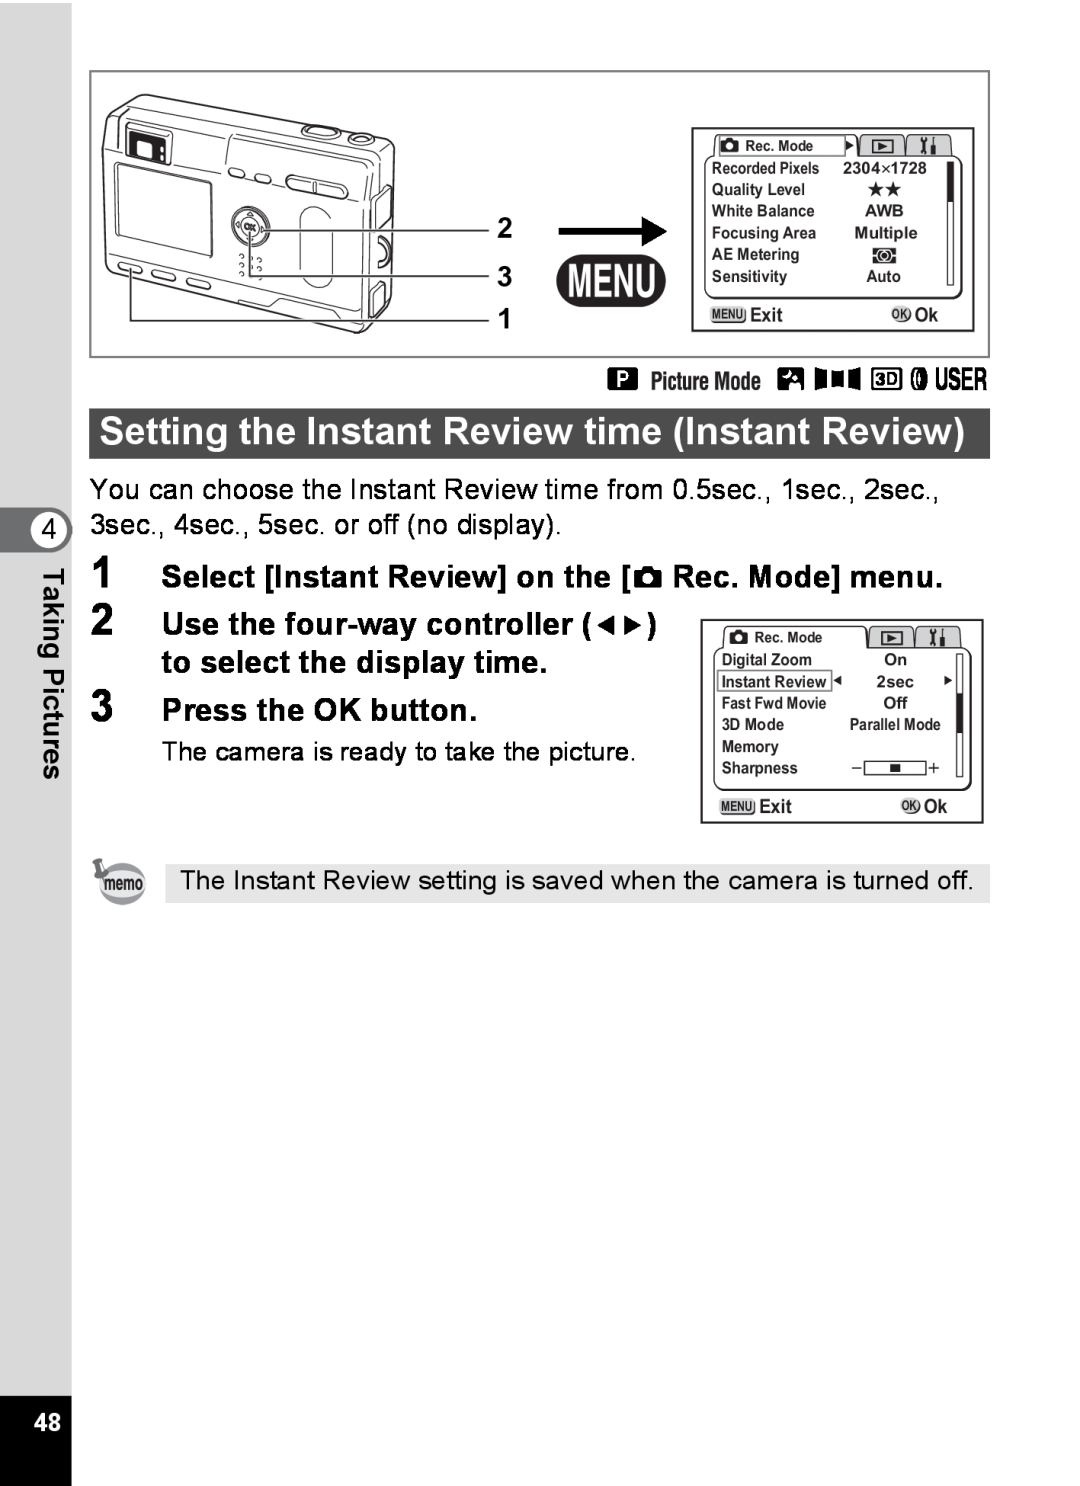 Pentax S4 manual Setting the Instant Review time Instant Review, Select Instant Review on the A Rec. Mode menu, B F Gde 